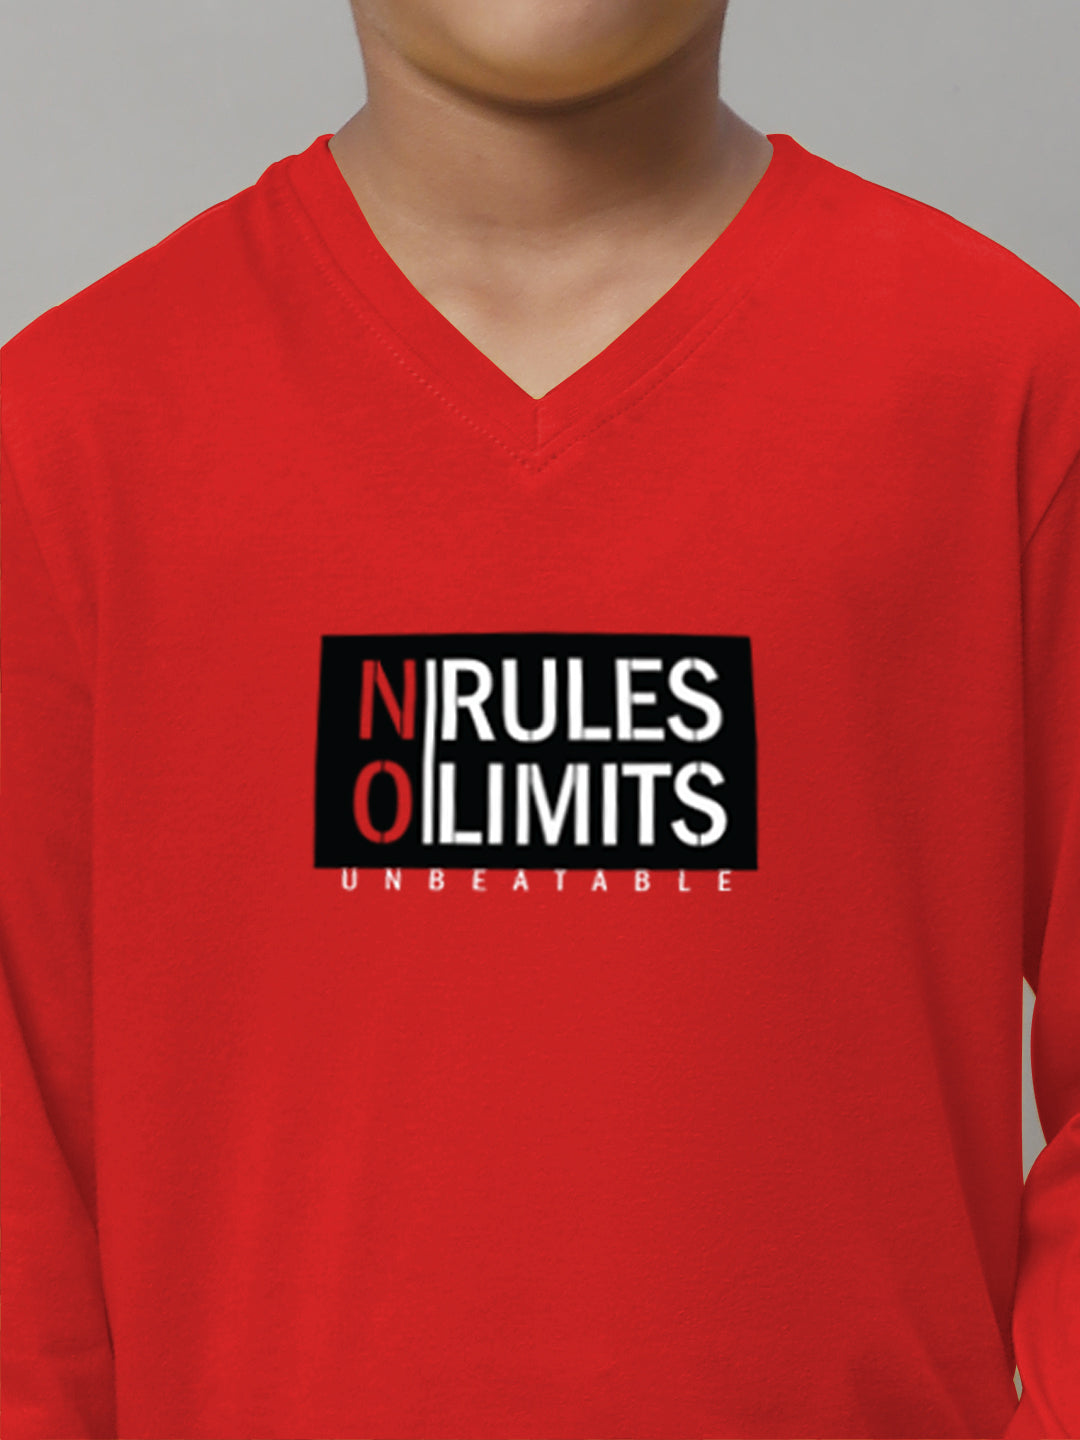 Boys No Rules No Limits Full Sleeves Printed T-Shirt - Friskers